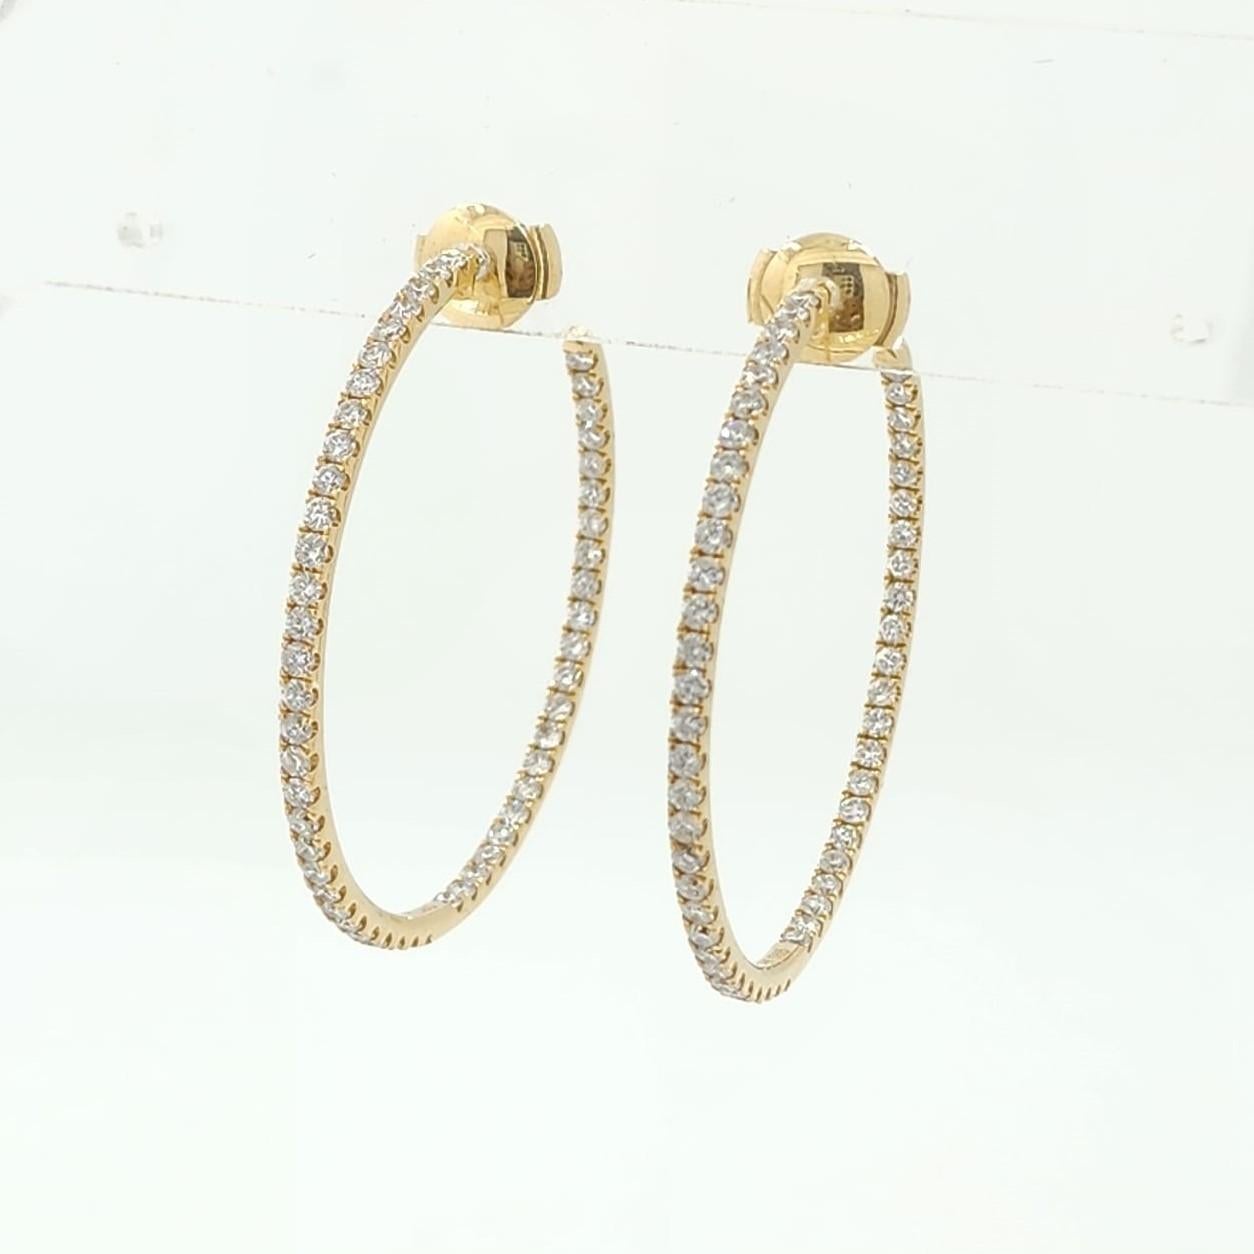 Contemporary 2.09 Carat Diamond Hoop Earrings in 14 Karat Yellow Gold For Sale